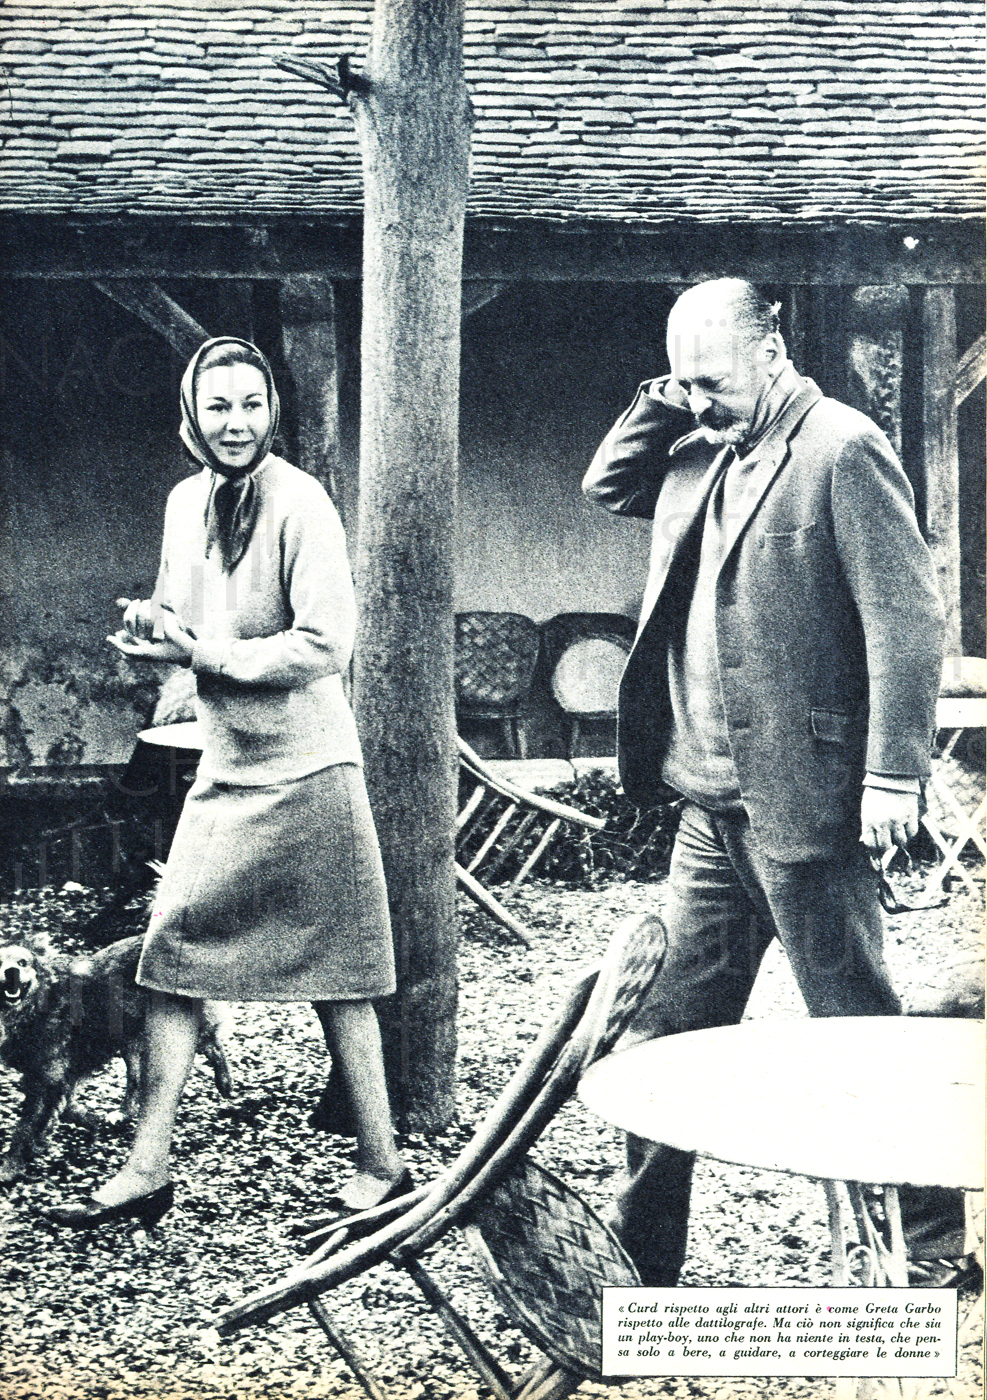 L'Europeo: „La quarta moglie“ Nr. 17, 1963